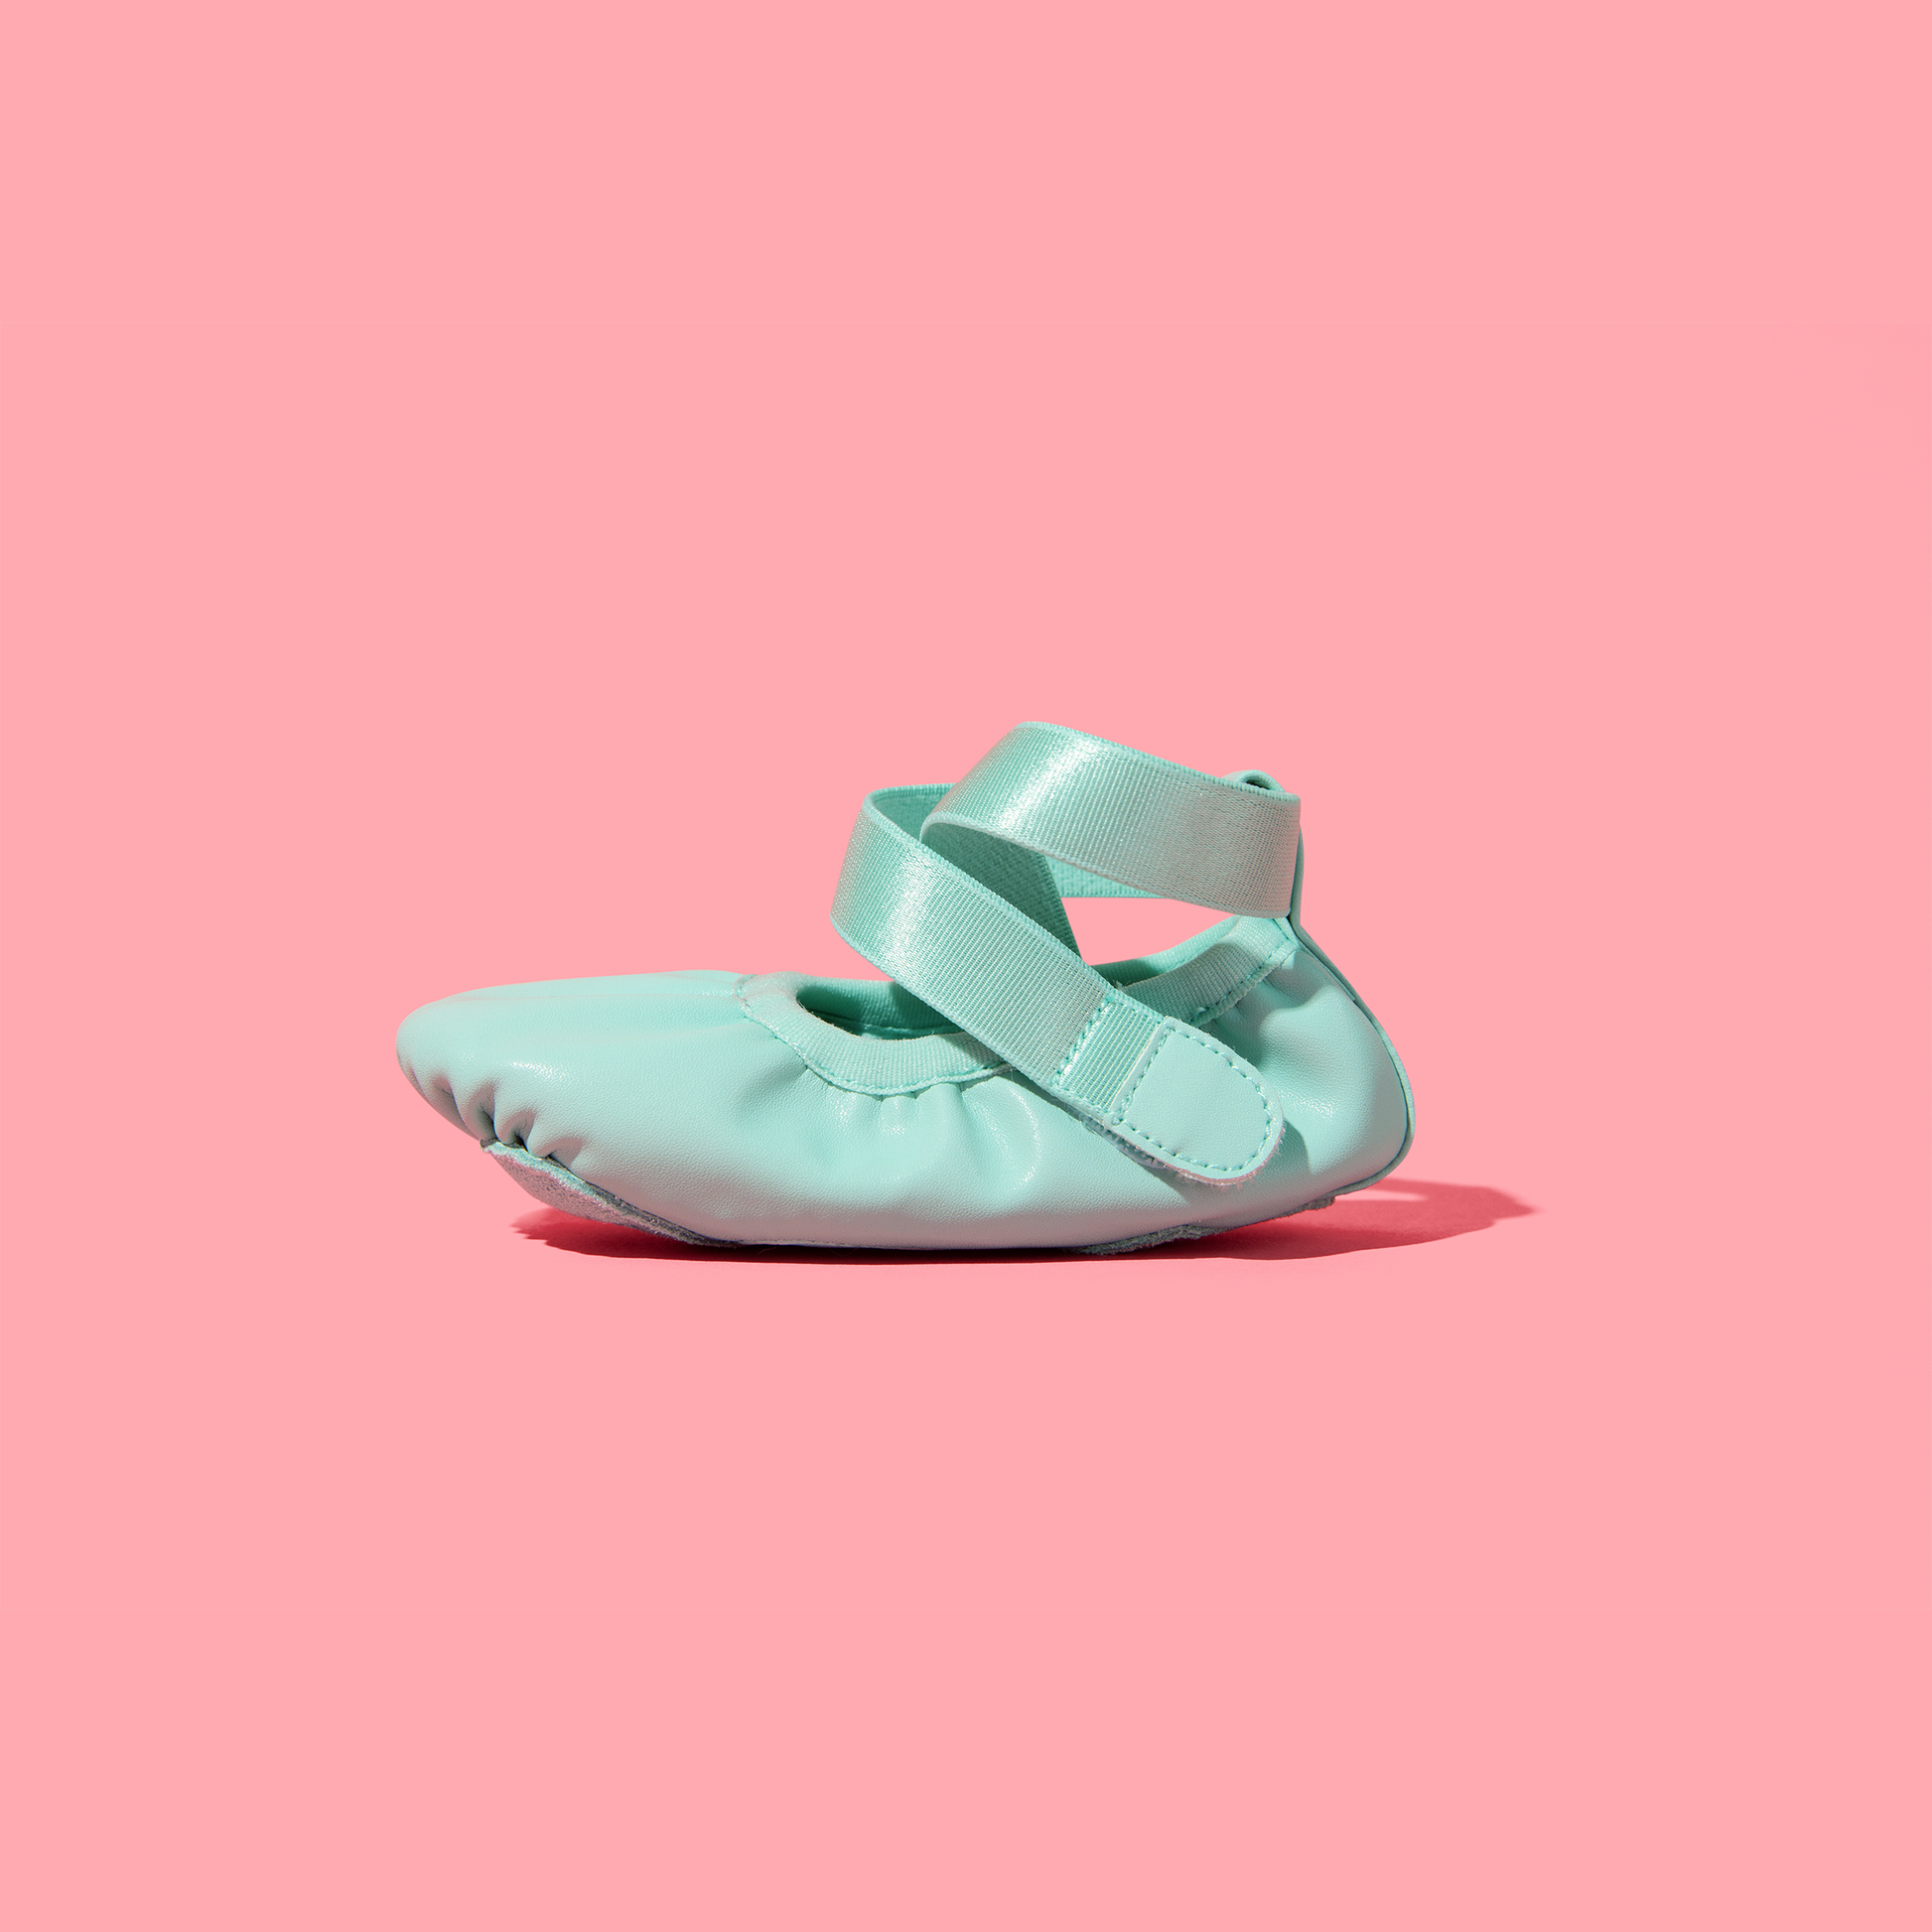 Mint colored kids ballet shoes - Slipps